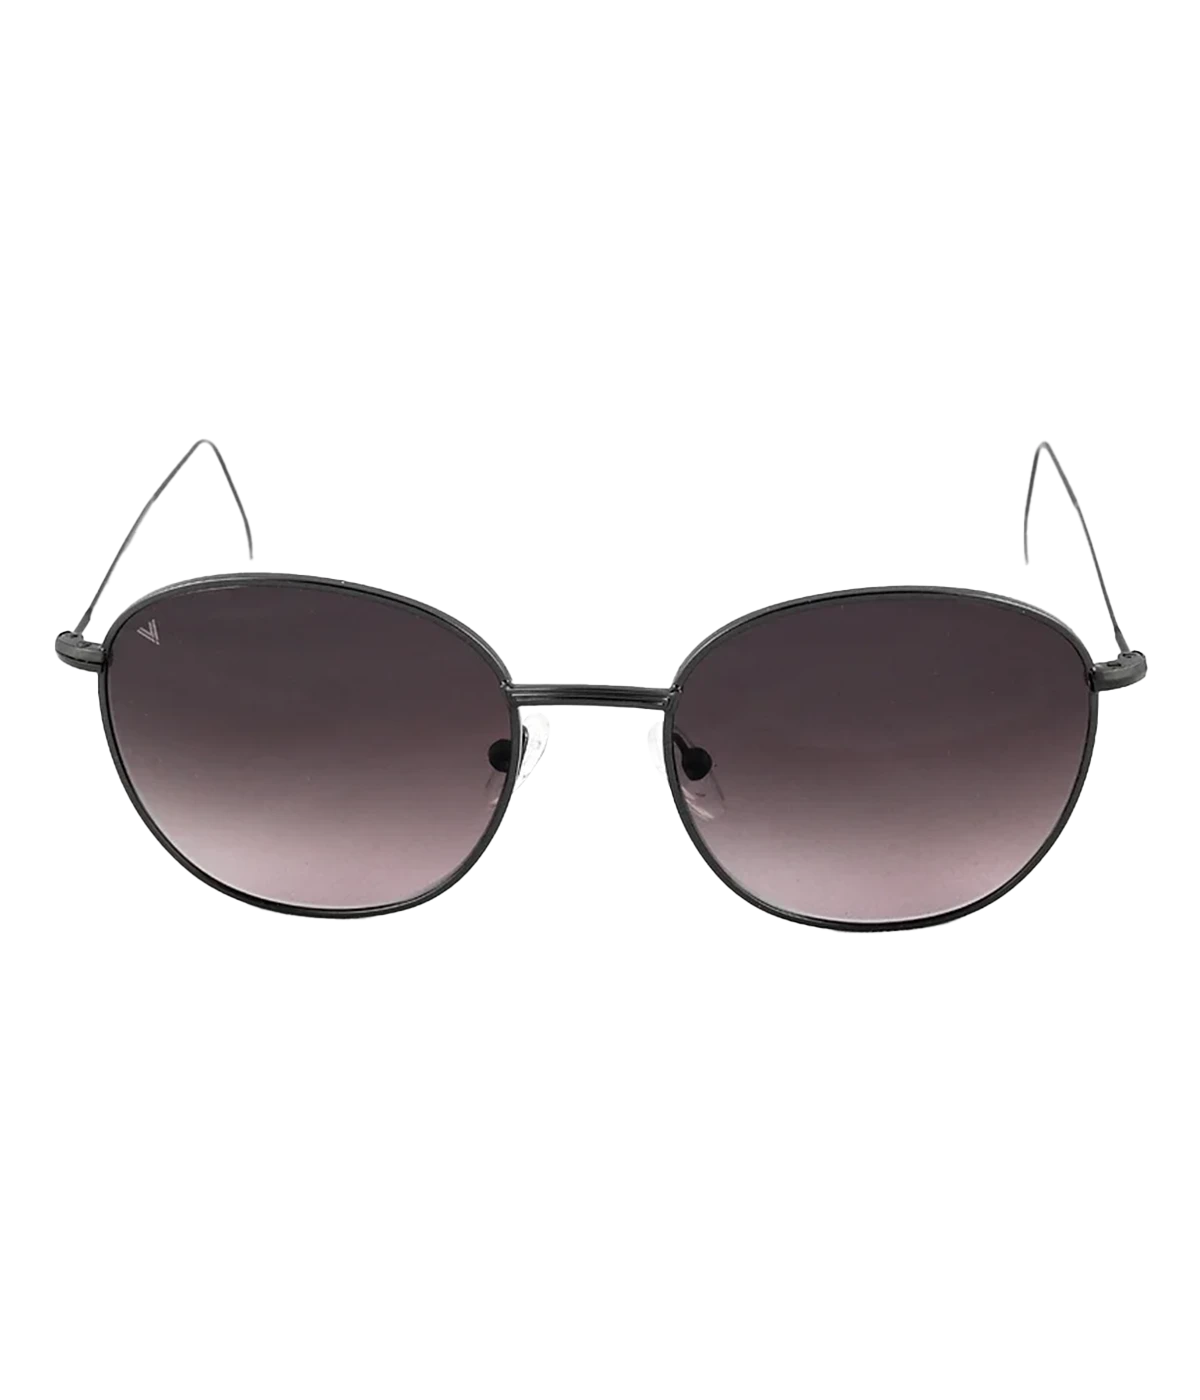 Maverick Sunglasses in Satin Shiny Black & Dark Purple Degrade